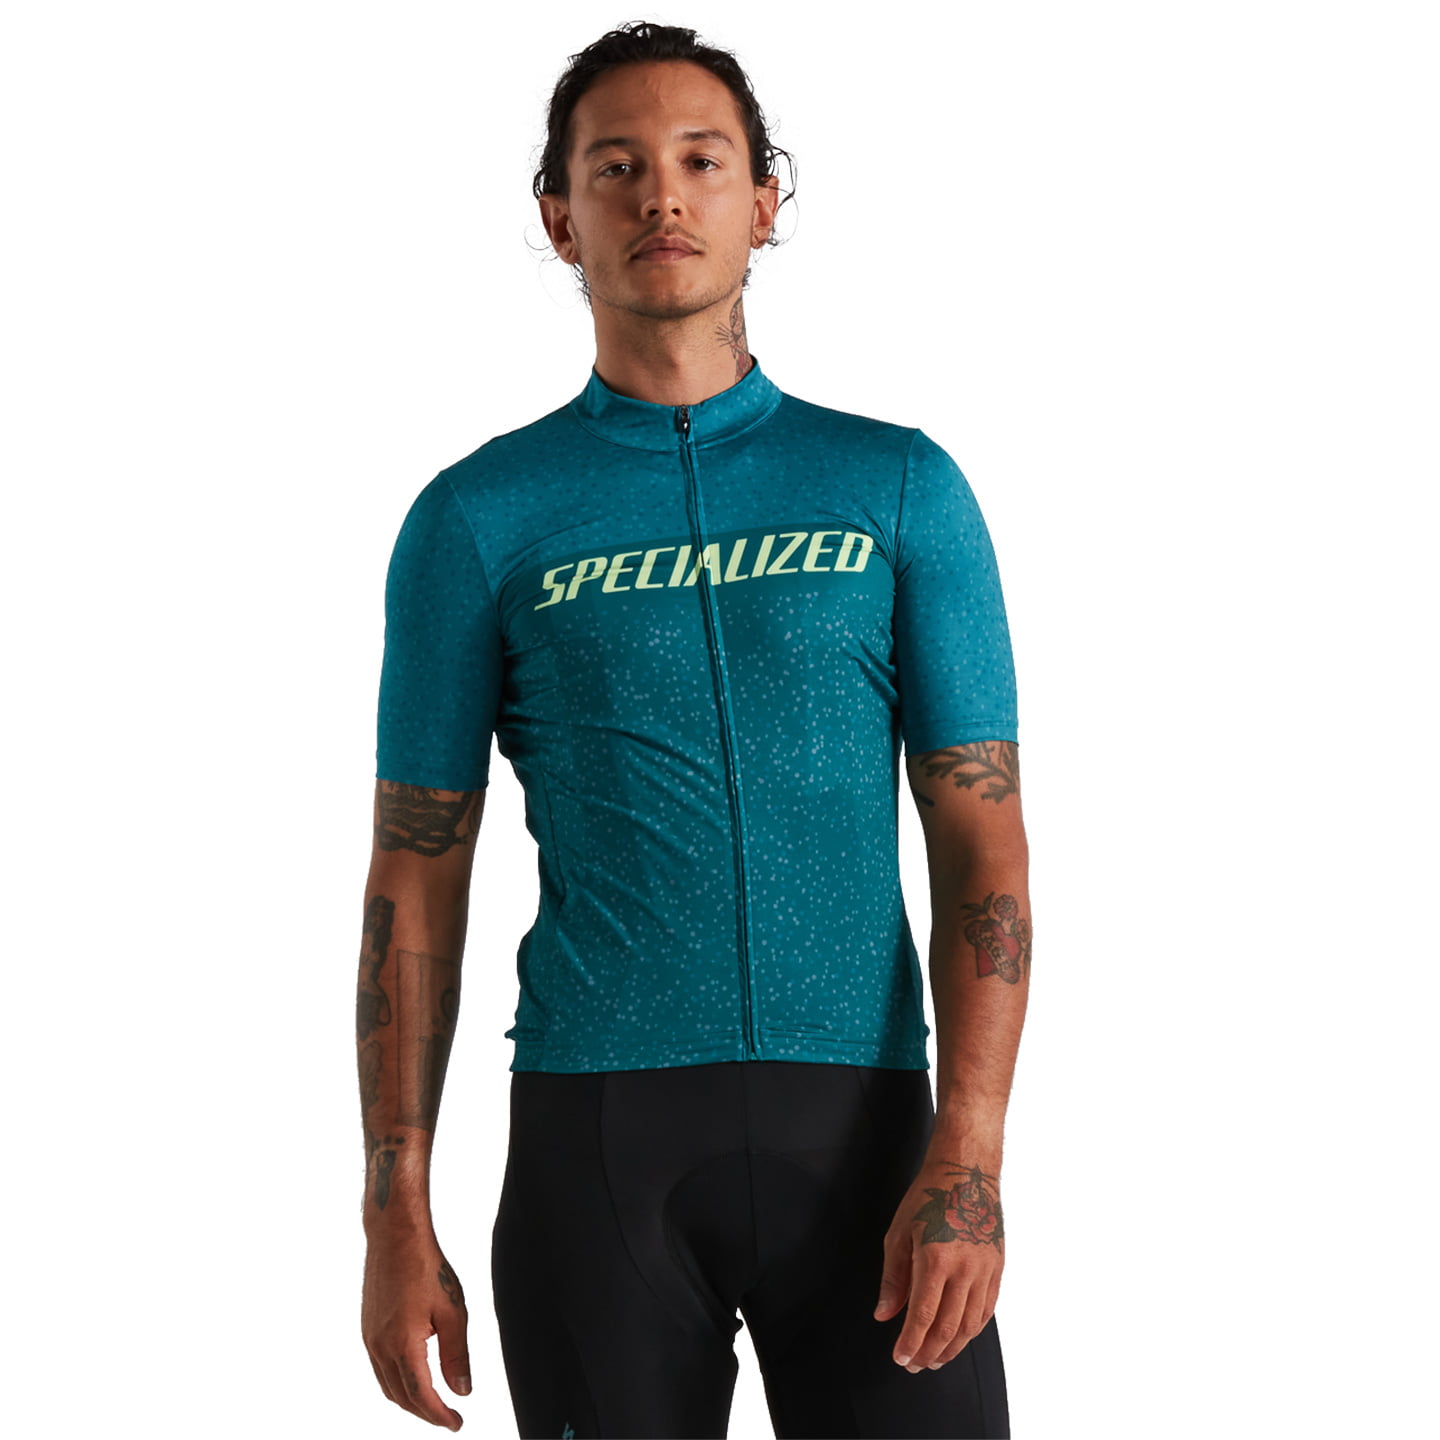 SPECIALIZED RBX Logo Short Sleeve Jersey Short Sleeve Jersey, for men, size L, Cycling jersey, Cycling clothing